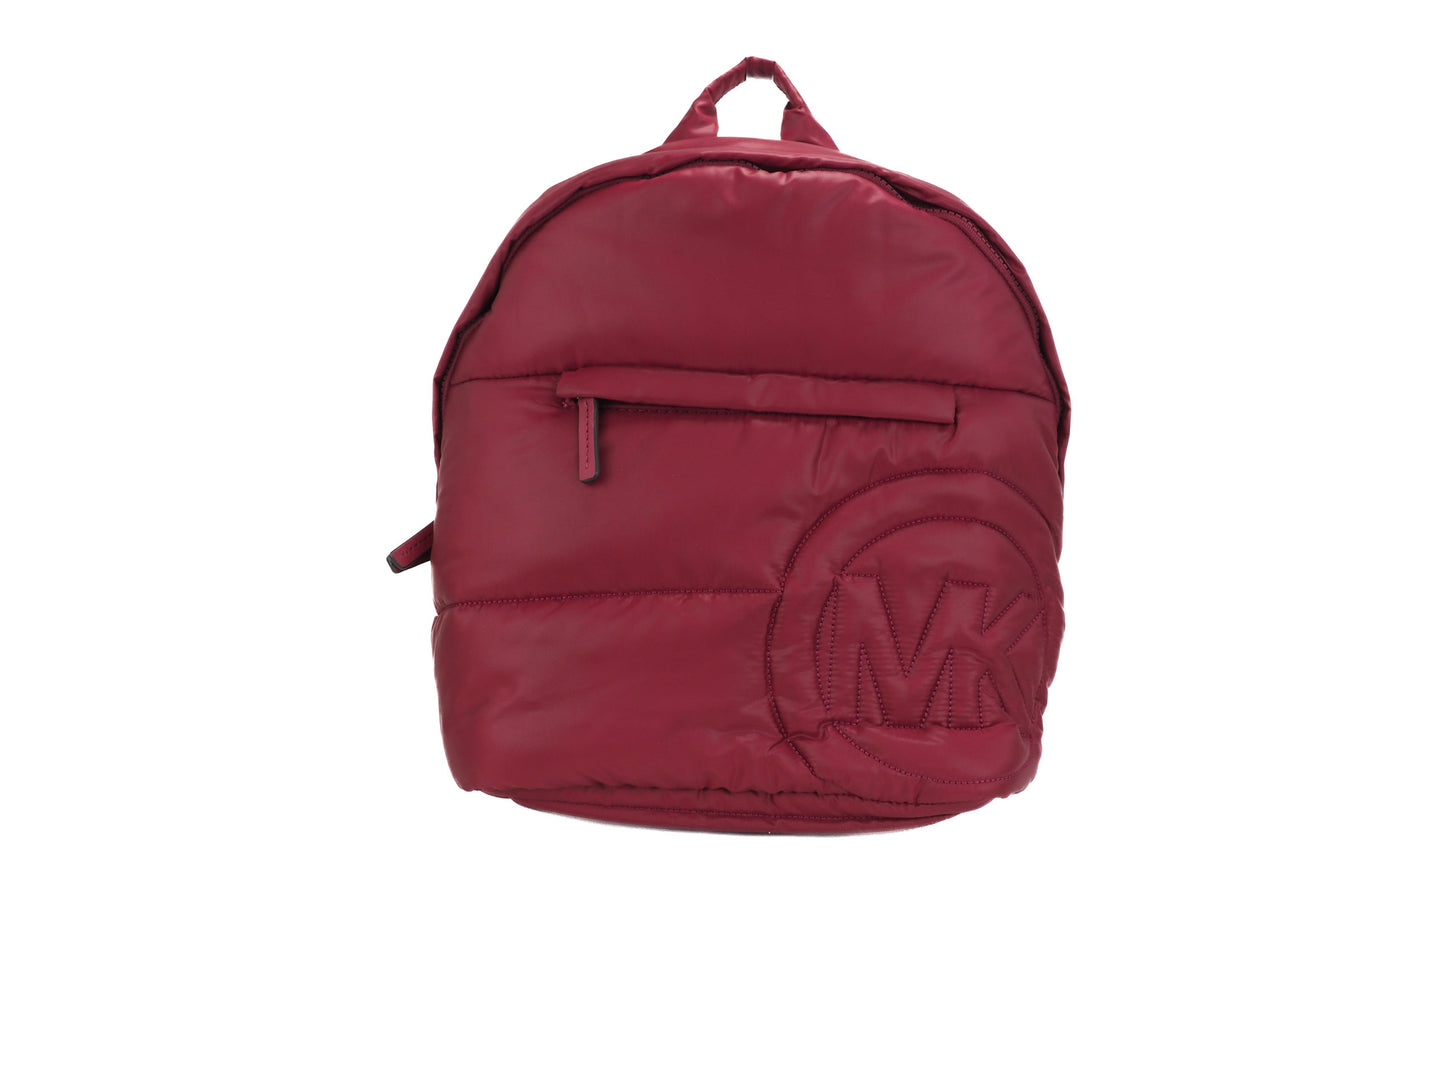 Rae Medium Quilted Nylon Fabric Backpack Bookbag (Berry)